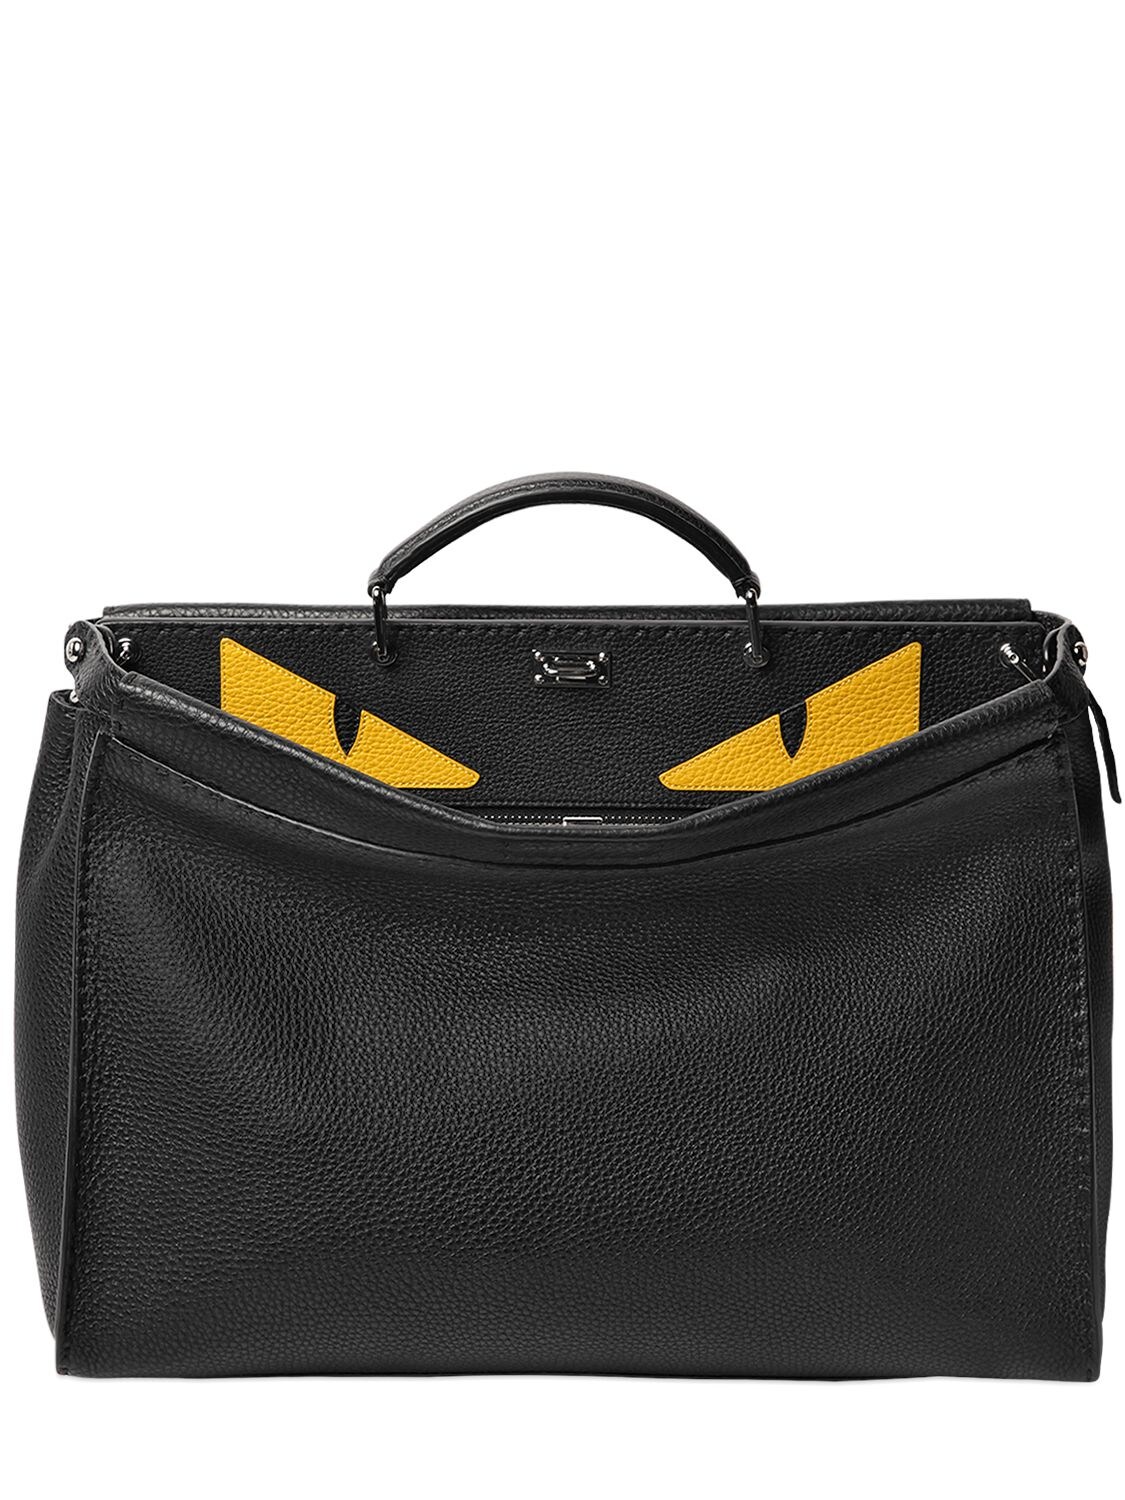 Fendi Medium Peekaboo Monster Leather Bag In Black/yellow